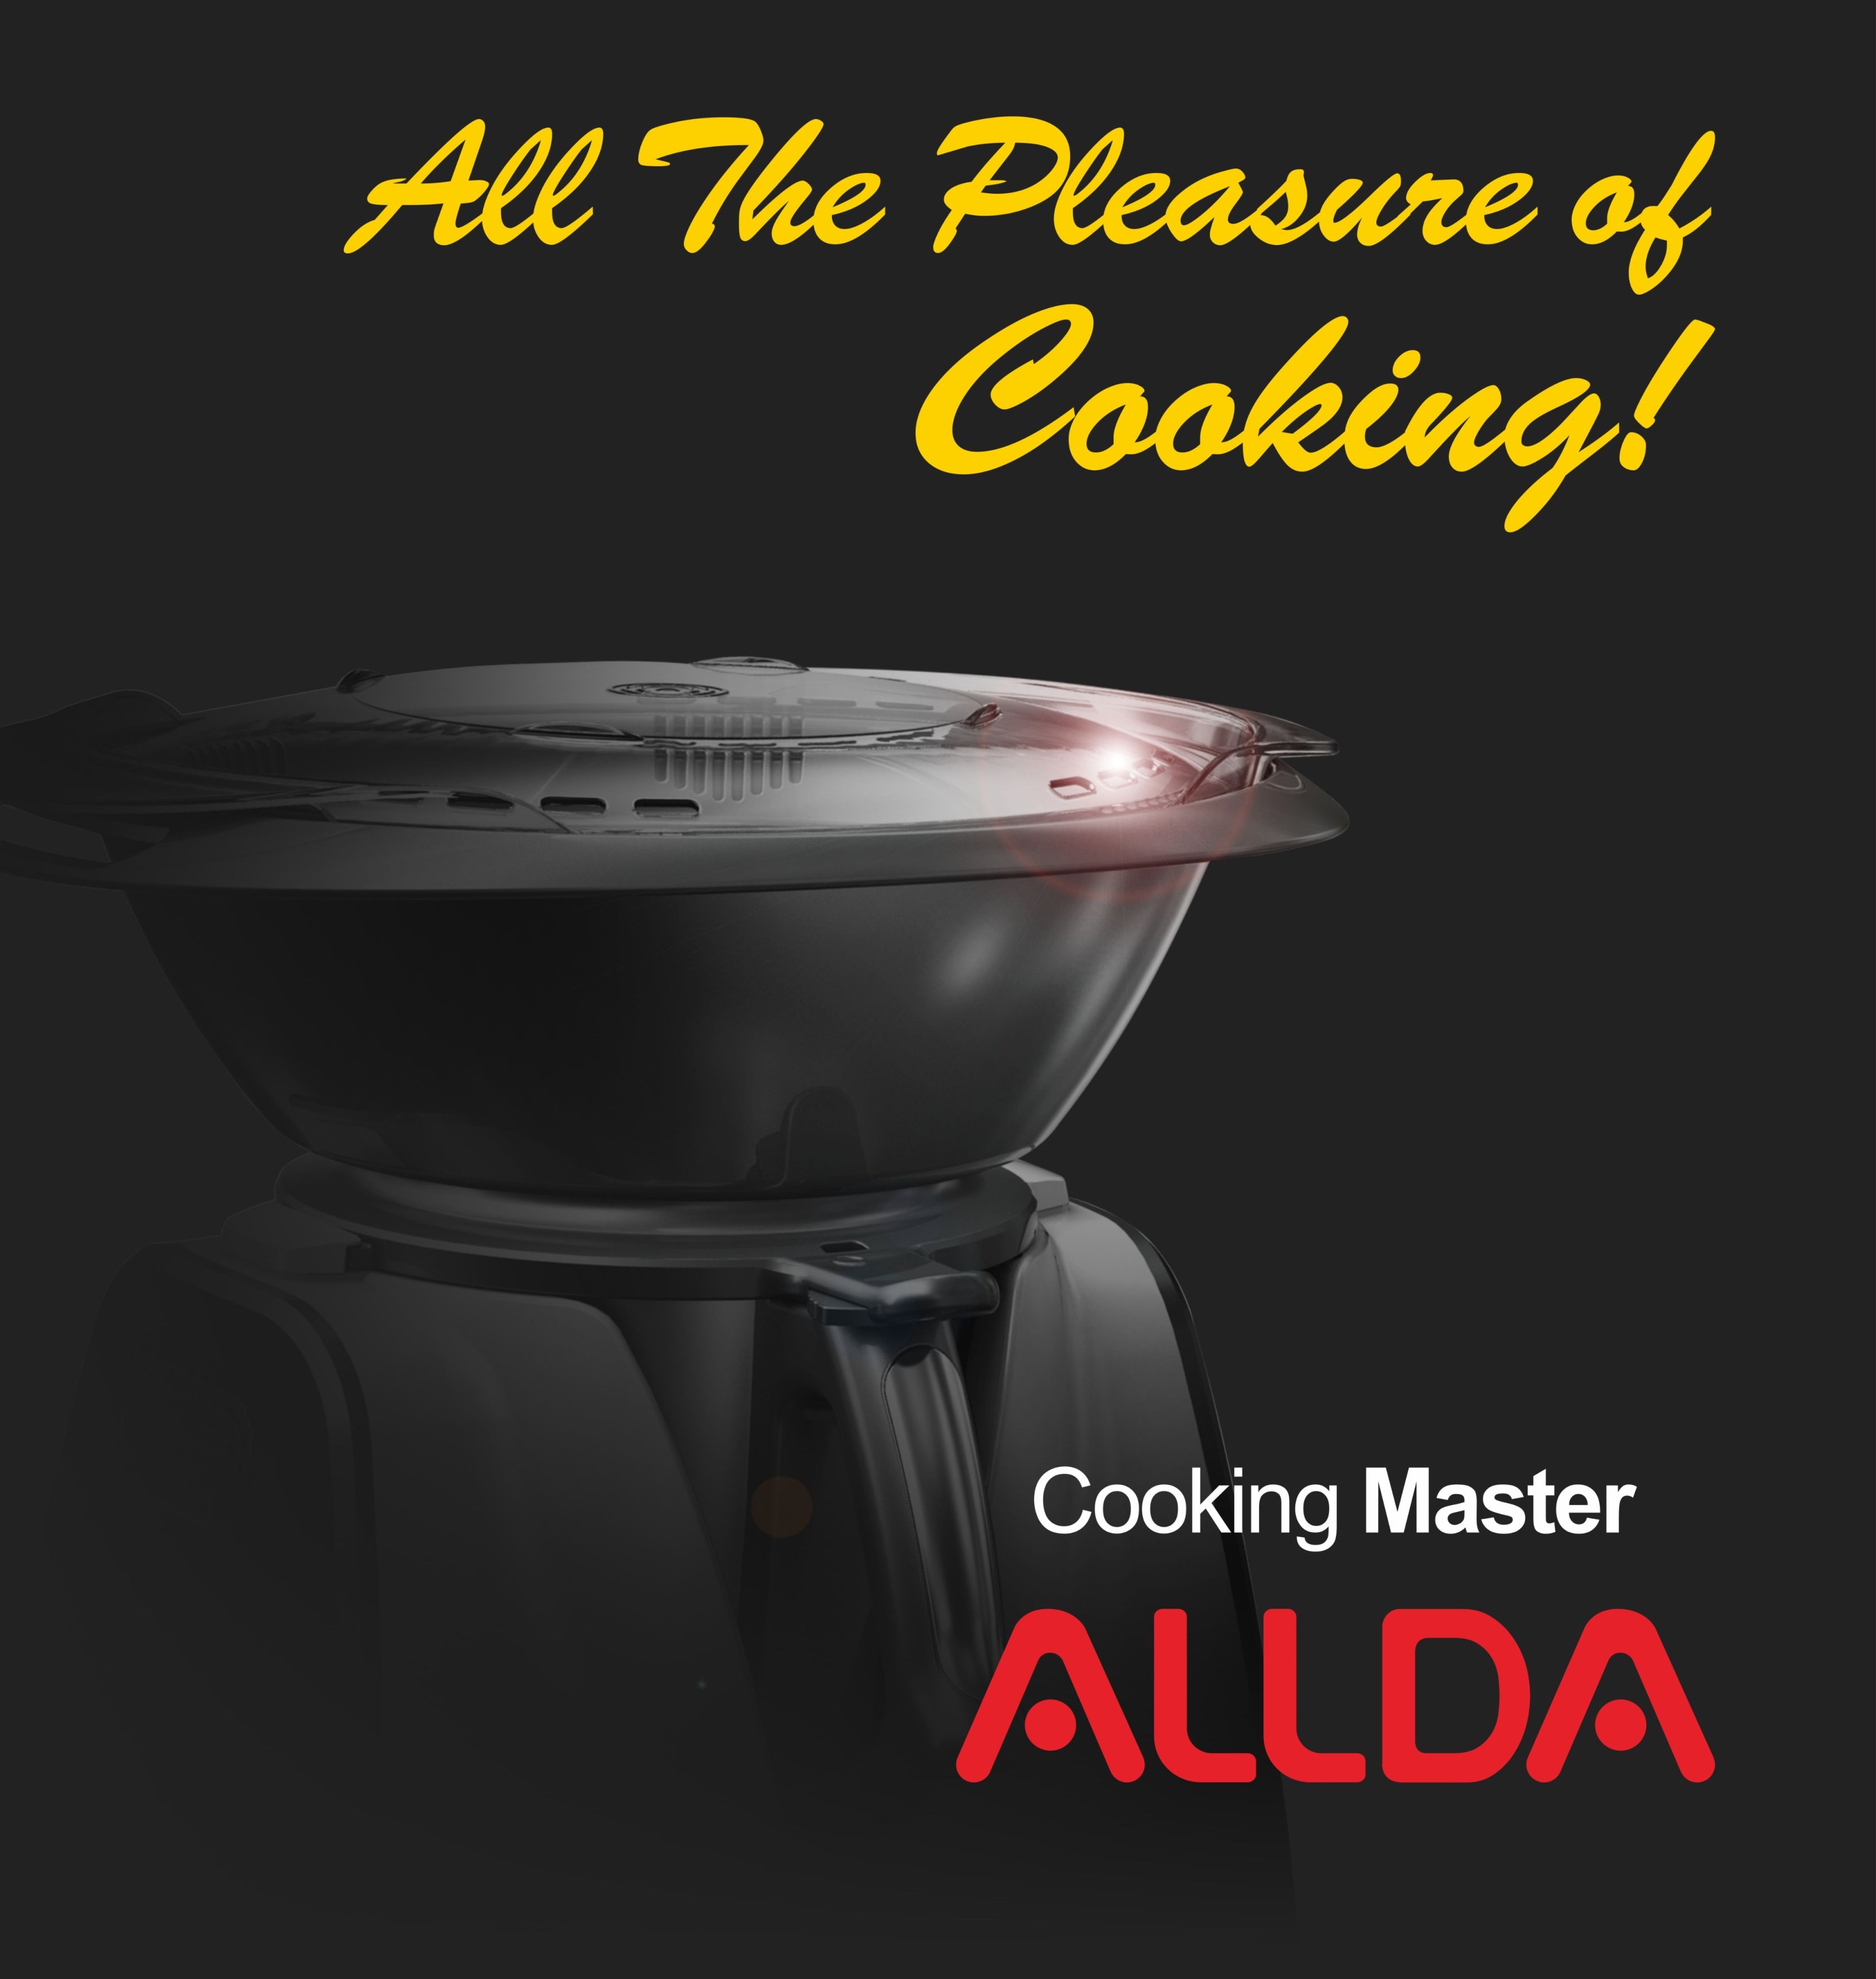 Máy nấu ăn đa năng Allda